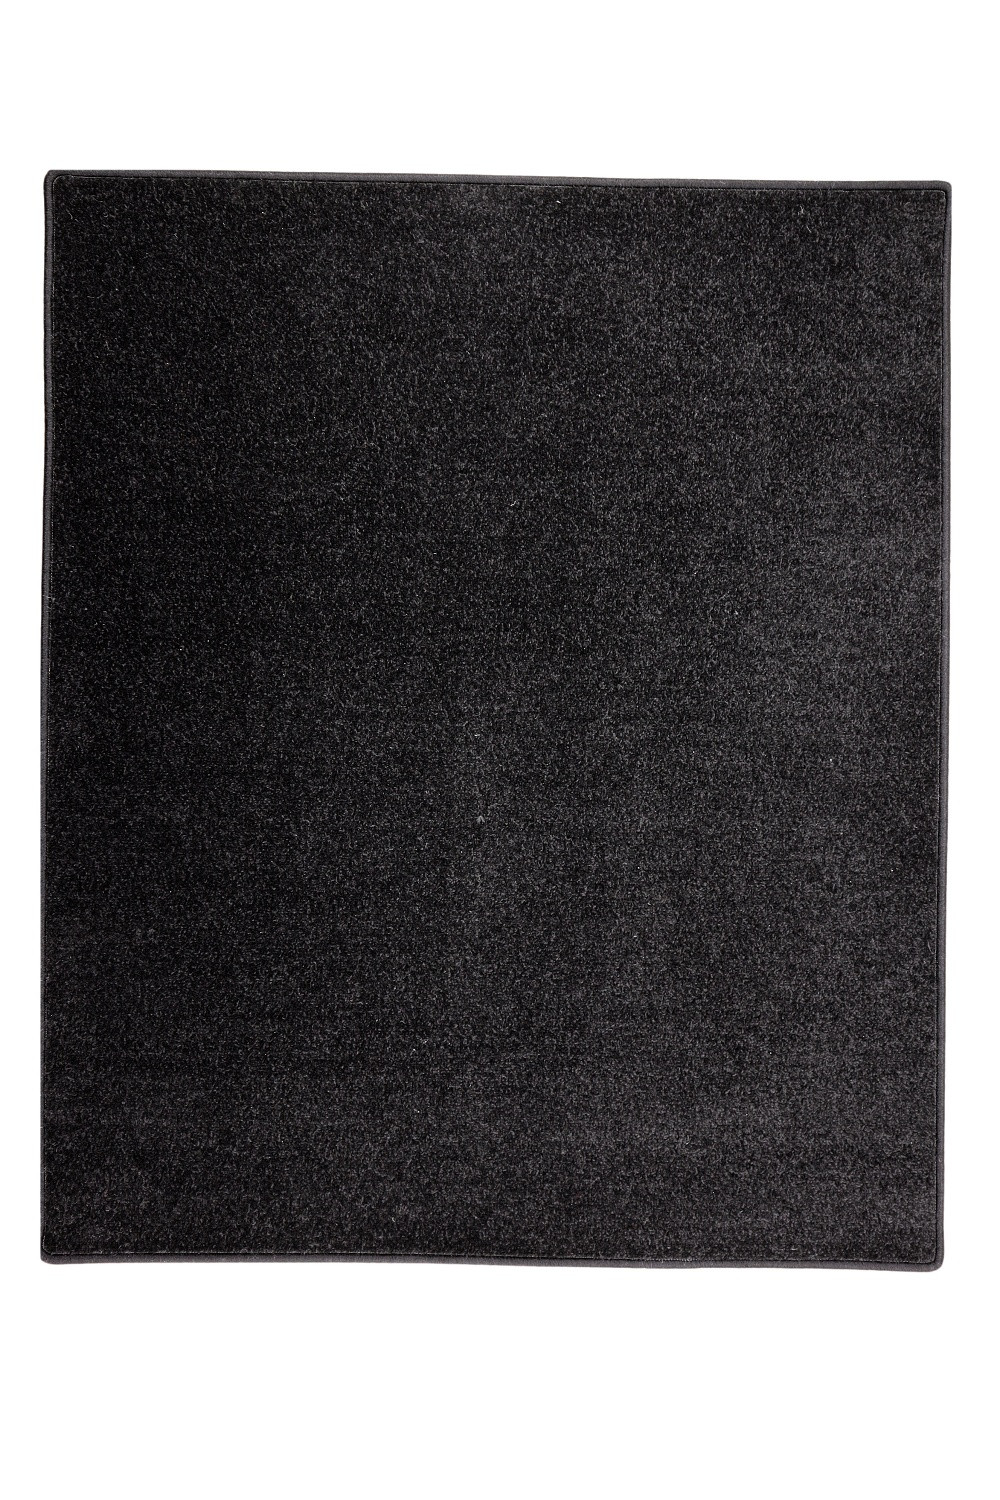 Vopi koberce Kusový koberec Eton černý 78 - 400x500 cm